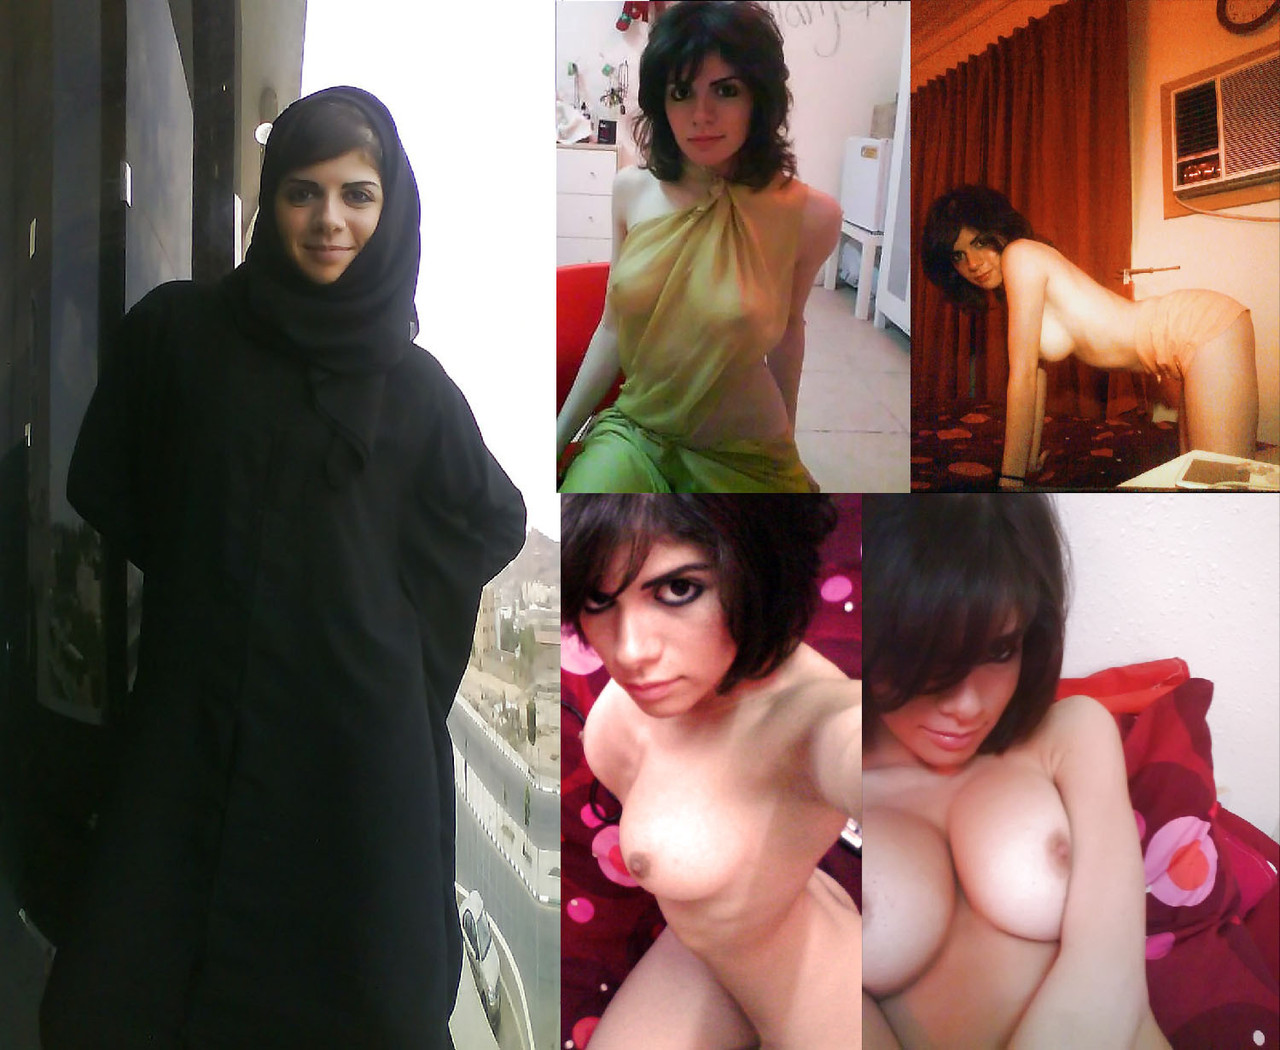 Arab com nude woman